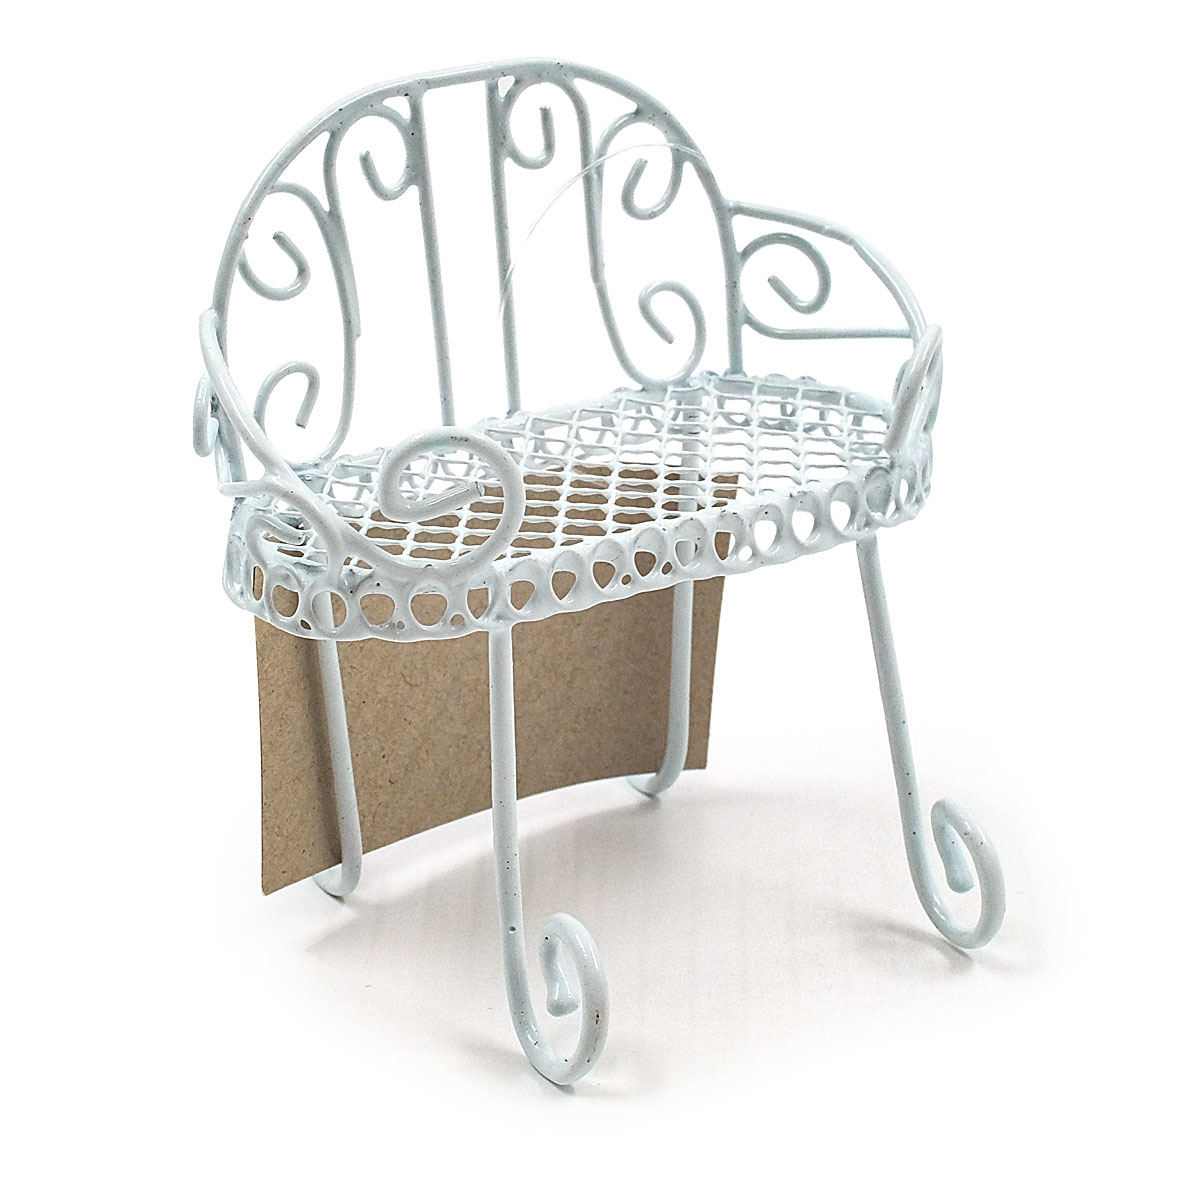 Мебель для куклы Астра металлический мини стул, белый KB3135 мебель для куклы астра металлический мини стул белый